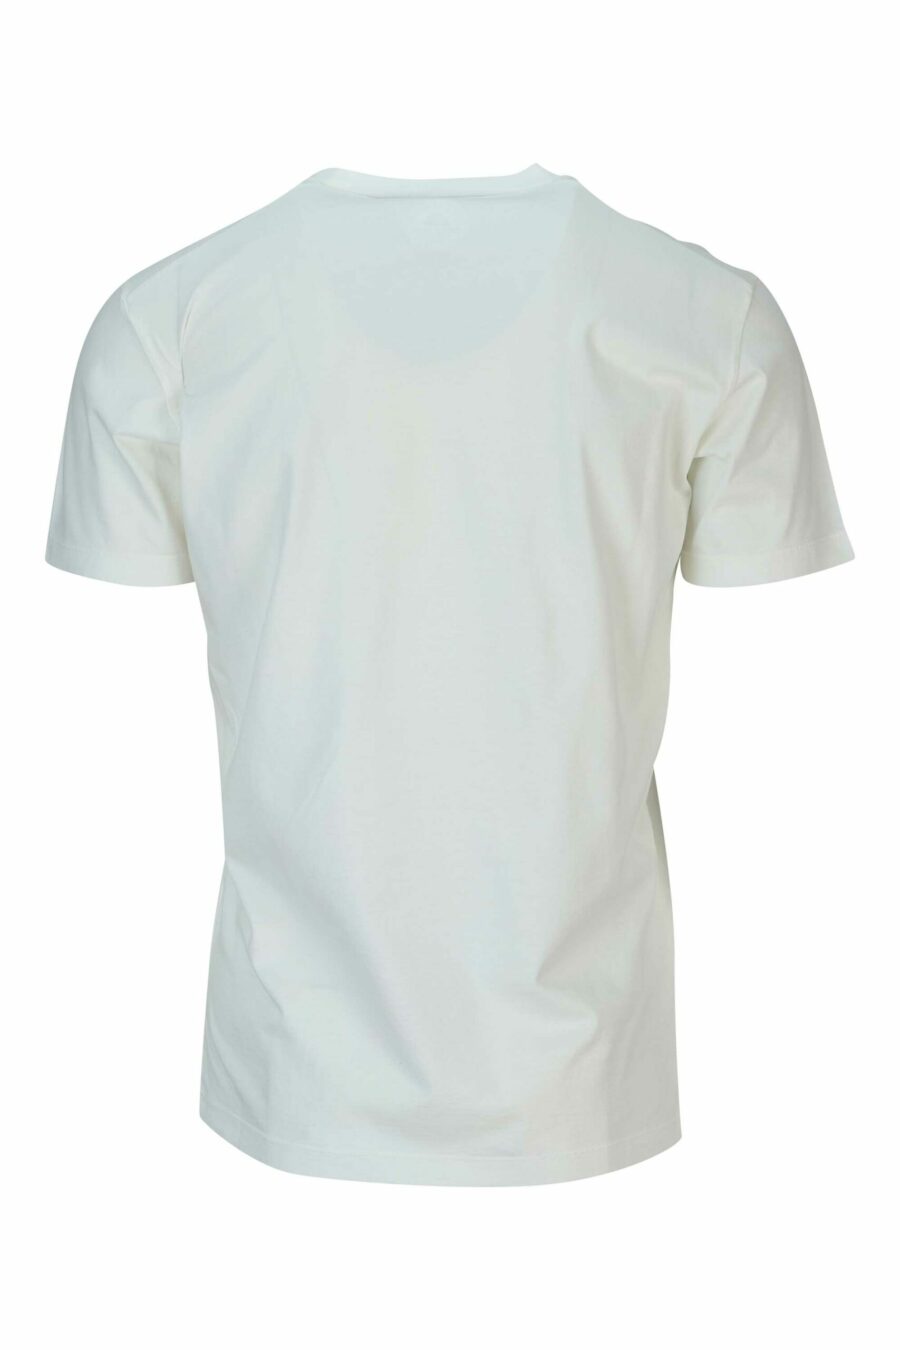 Camiseta blanca con maxilogo "vip" - 8054148578855 1 scaled